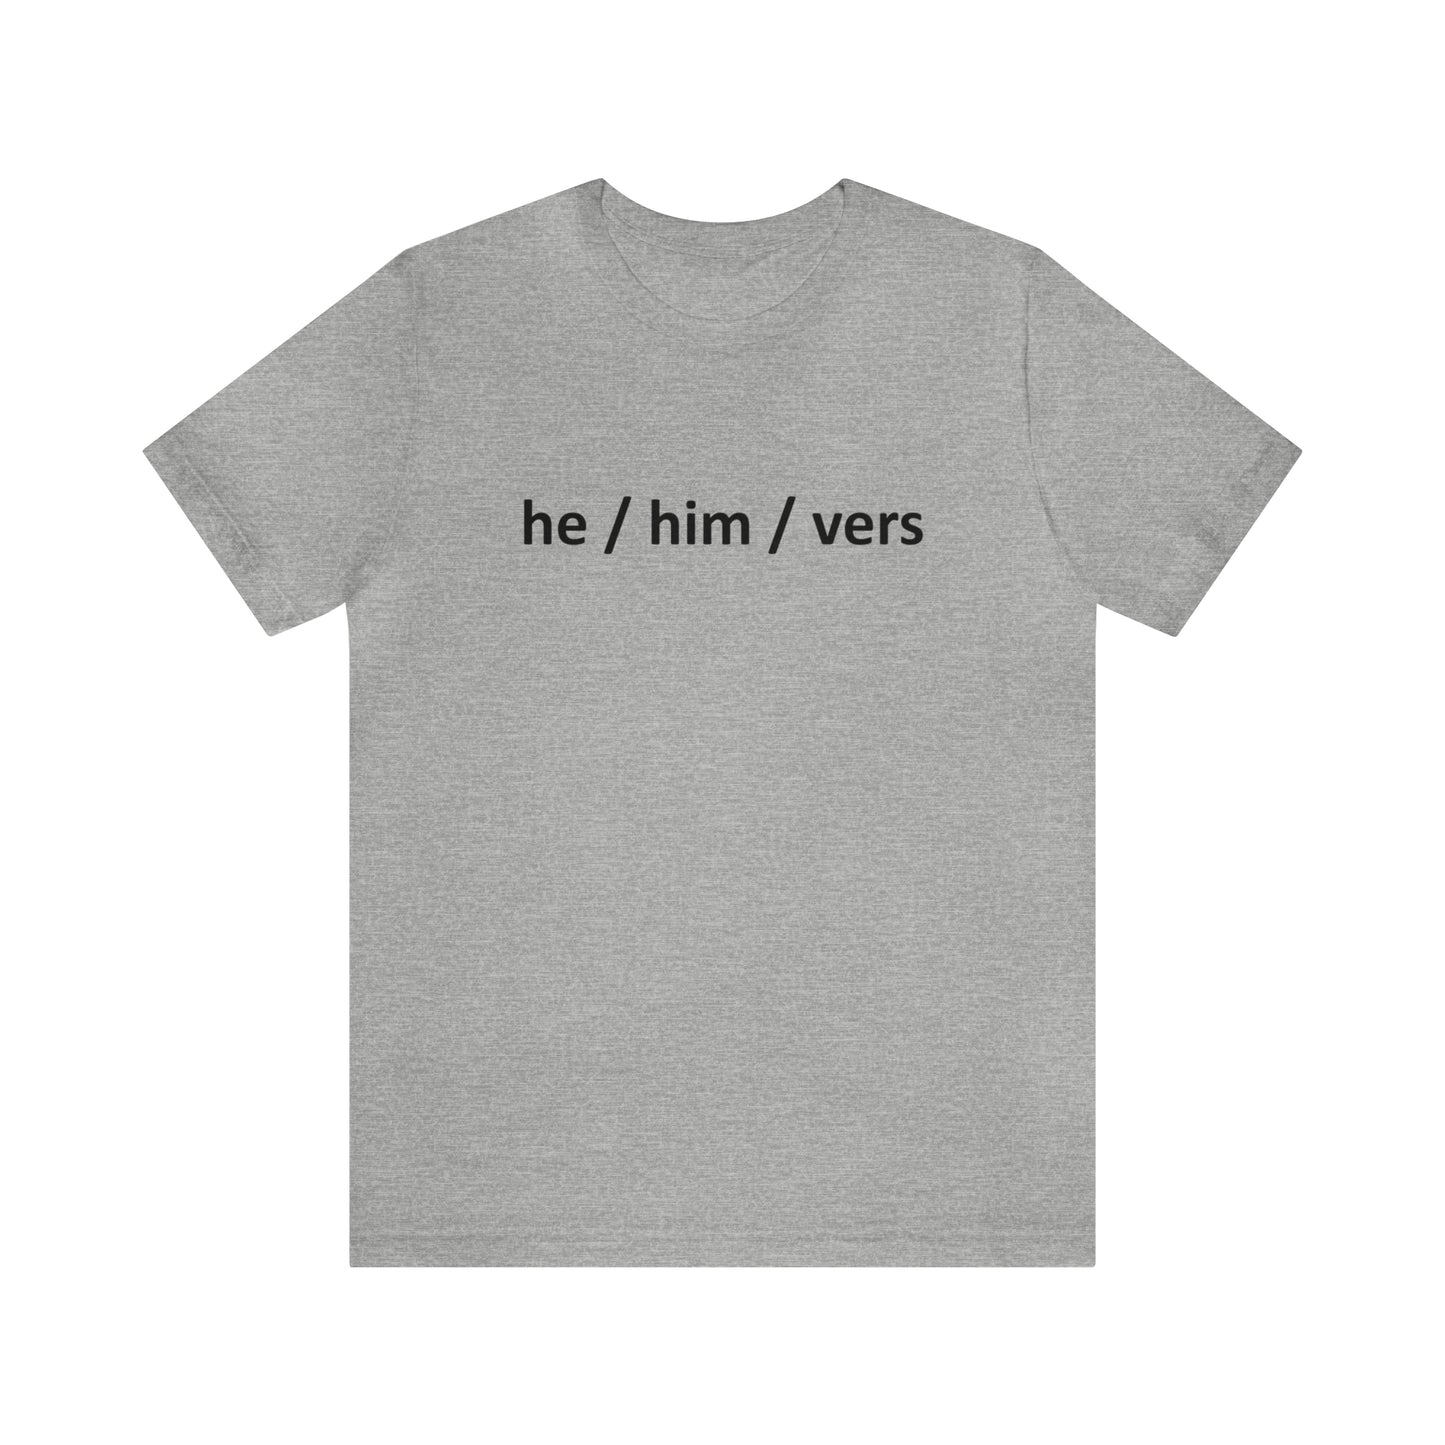 he / him / vers Pronoun Short Sleeve T-Shirt